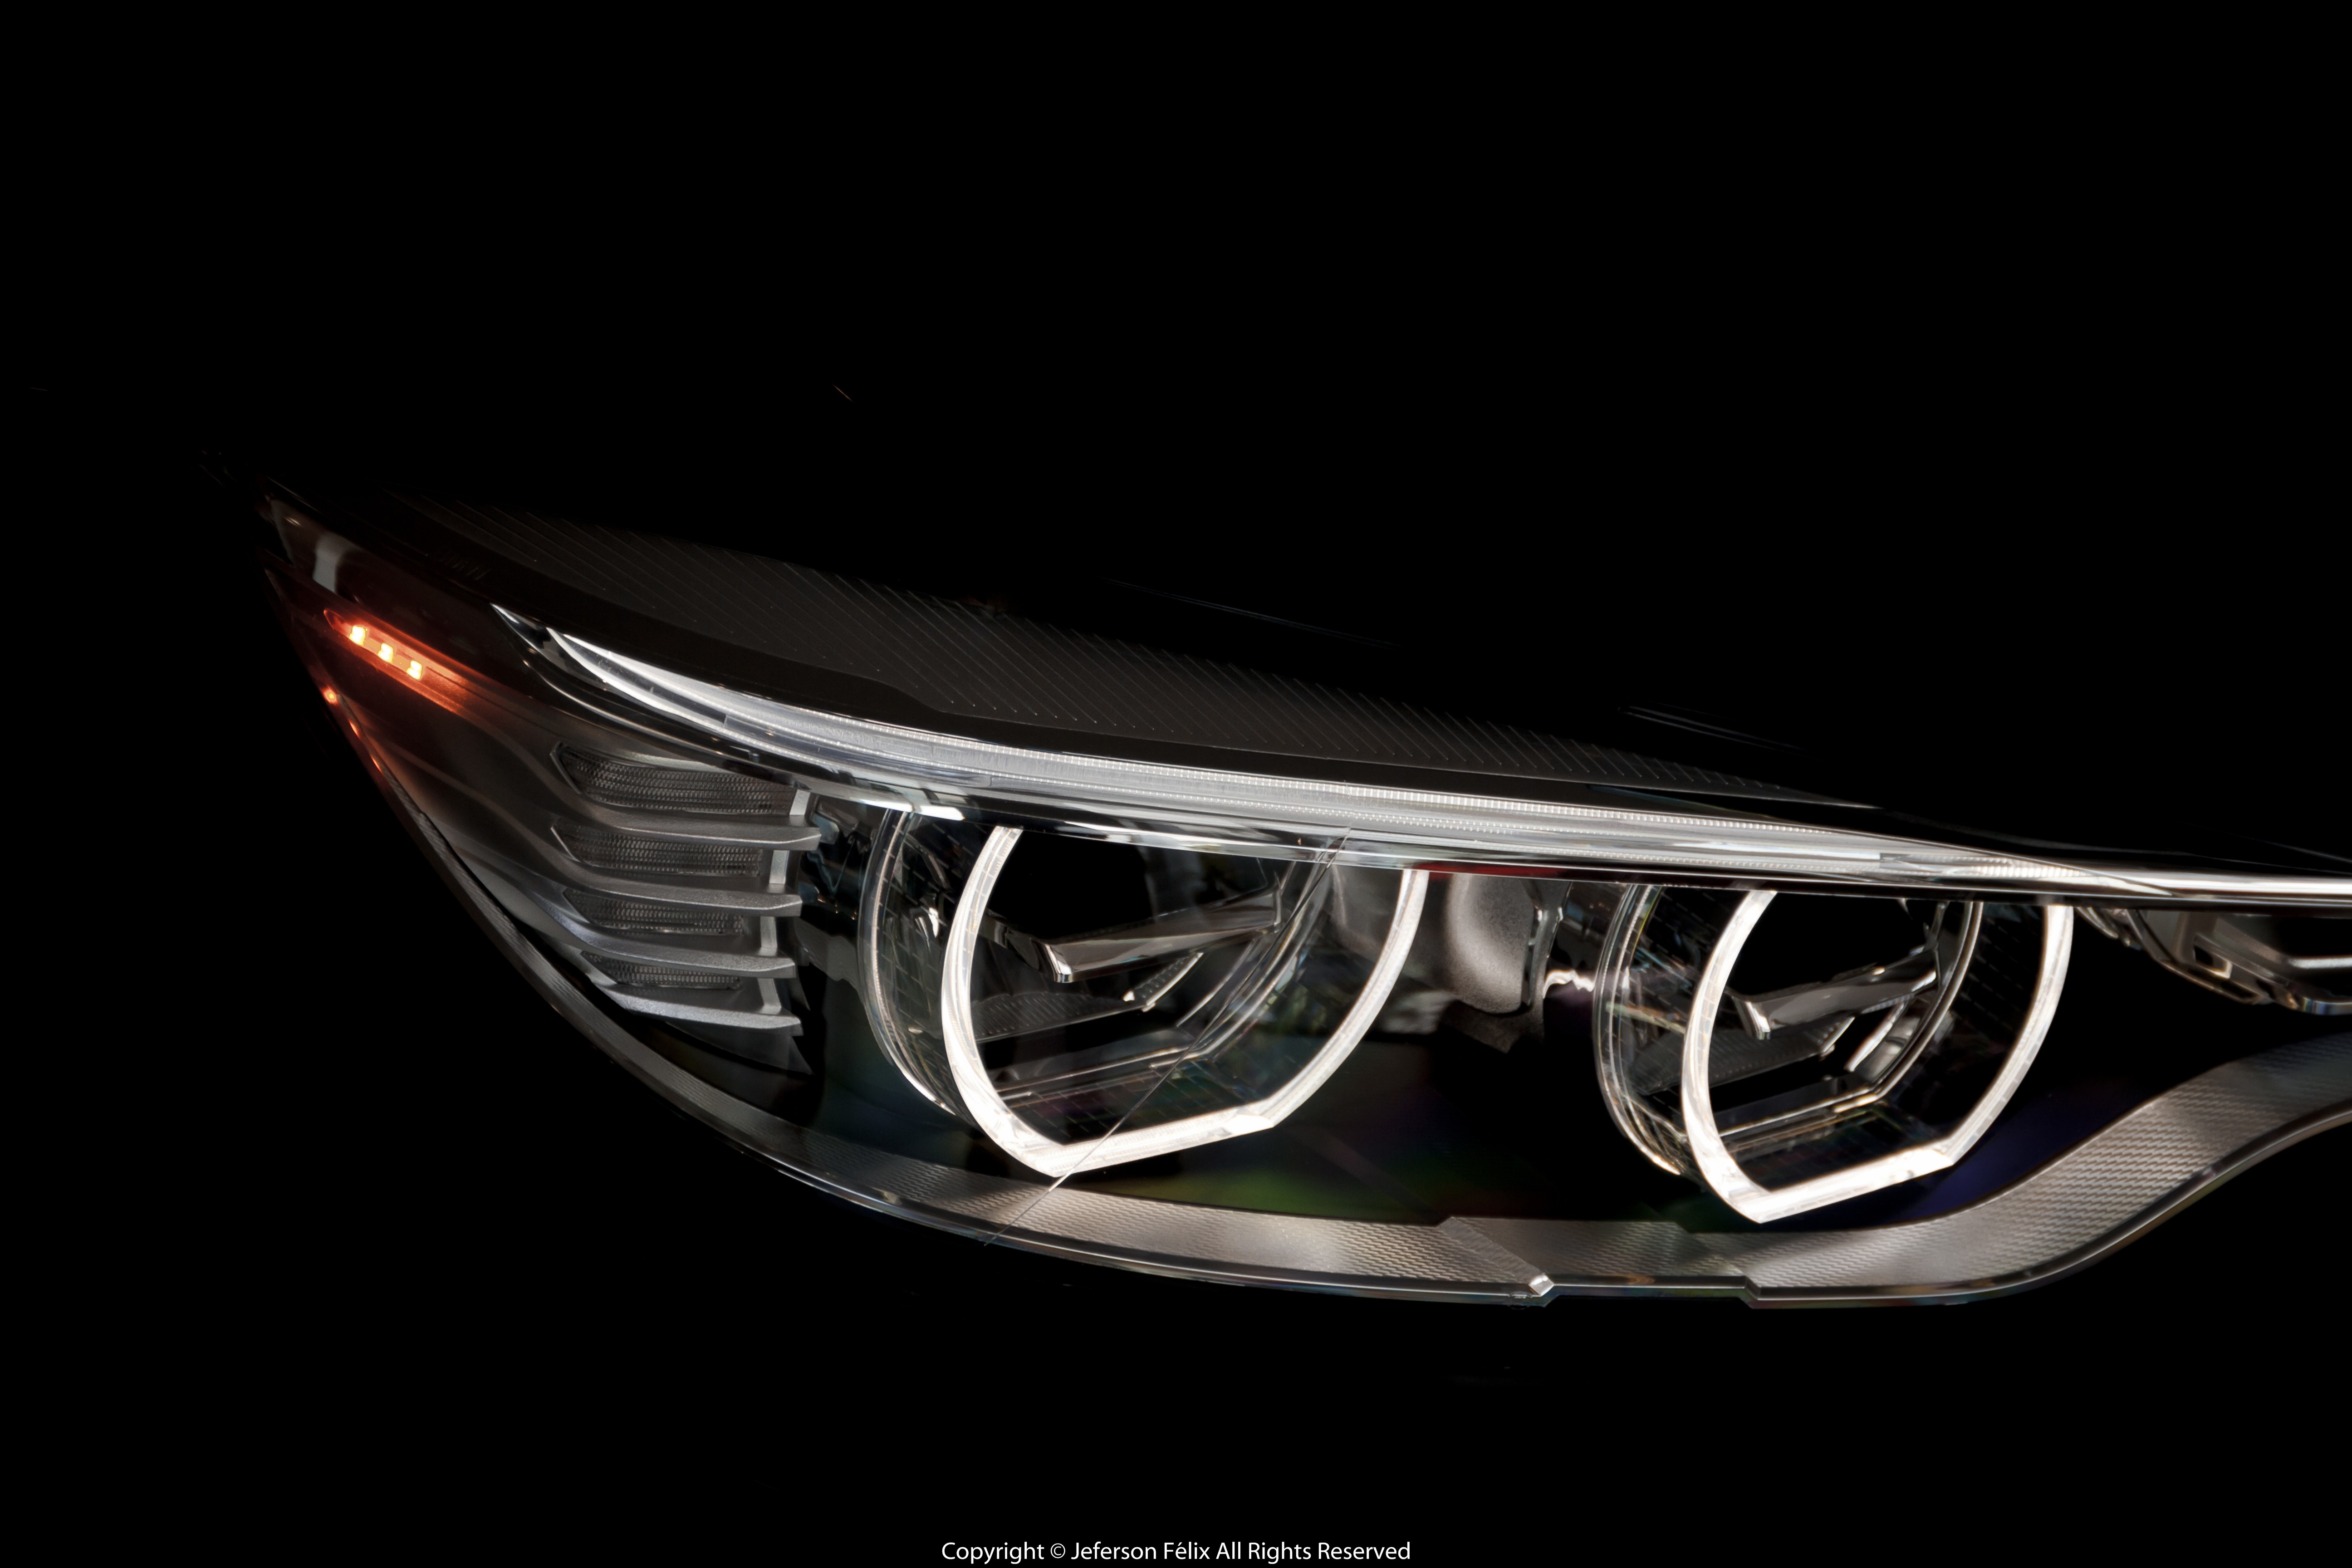 BMW Headlights LED Headlight 5184x3456